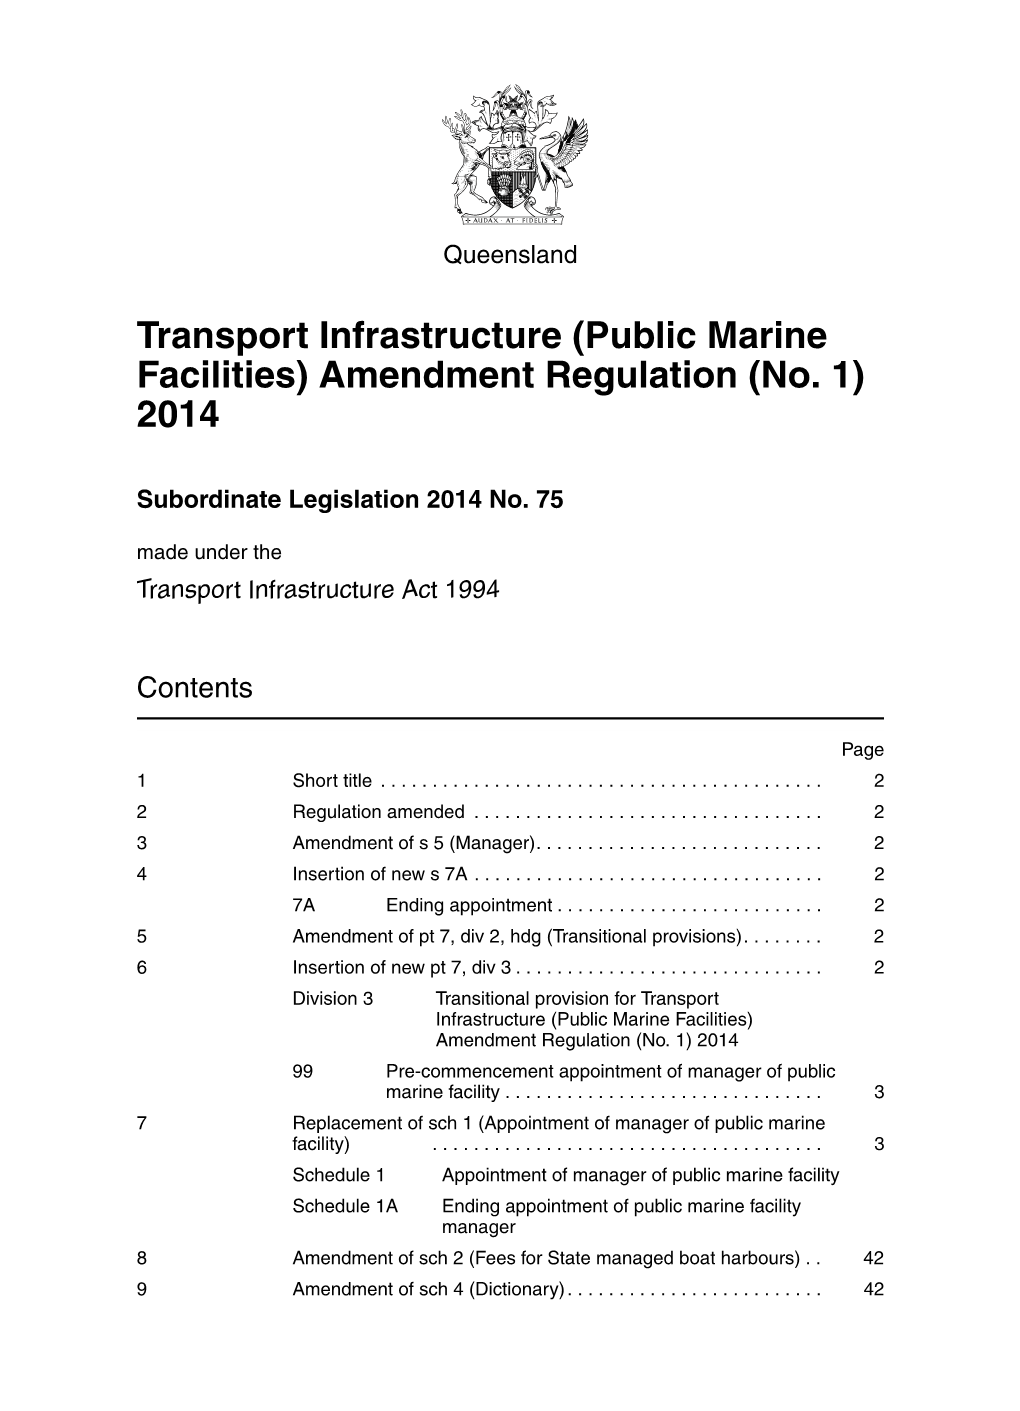 Transport Infrastructure (Public Marine Facilities) Amendment Regulation (No